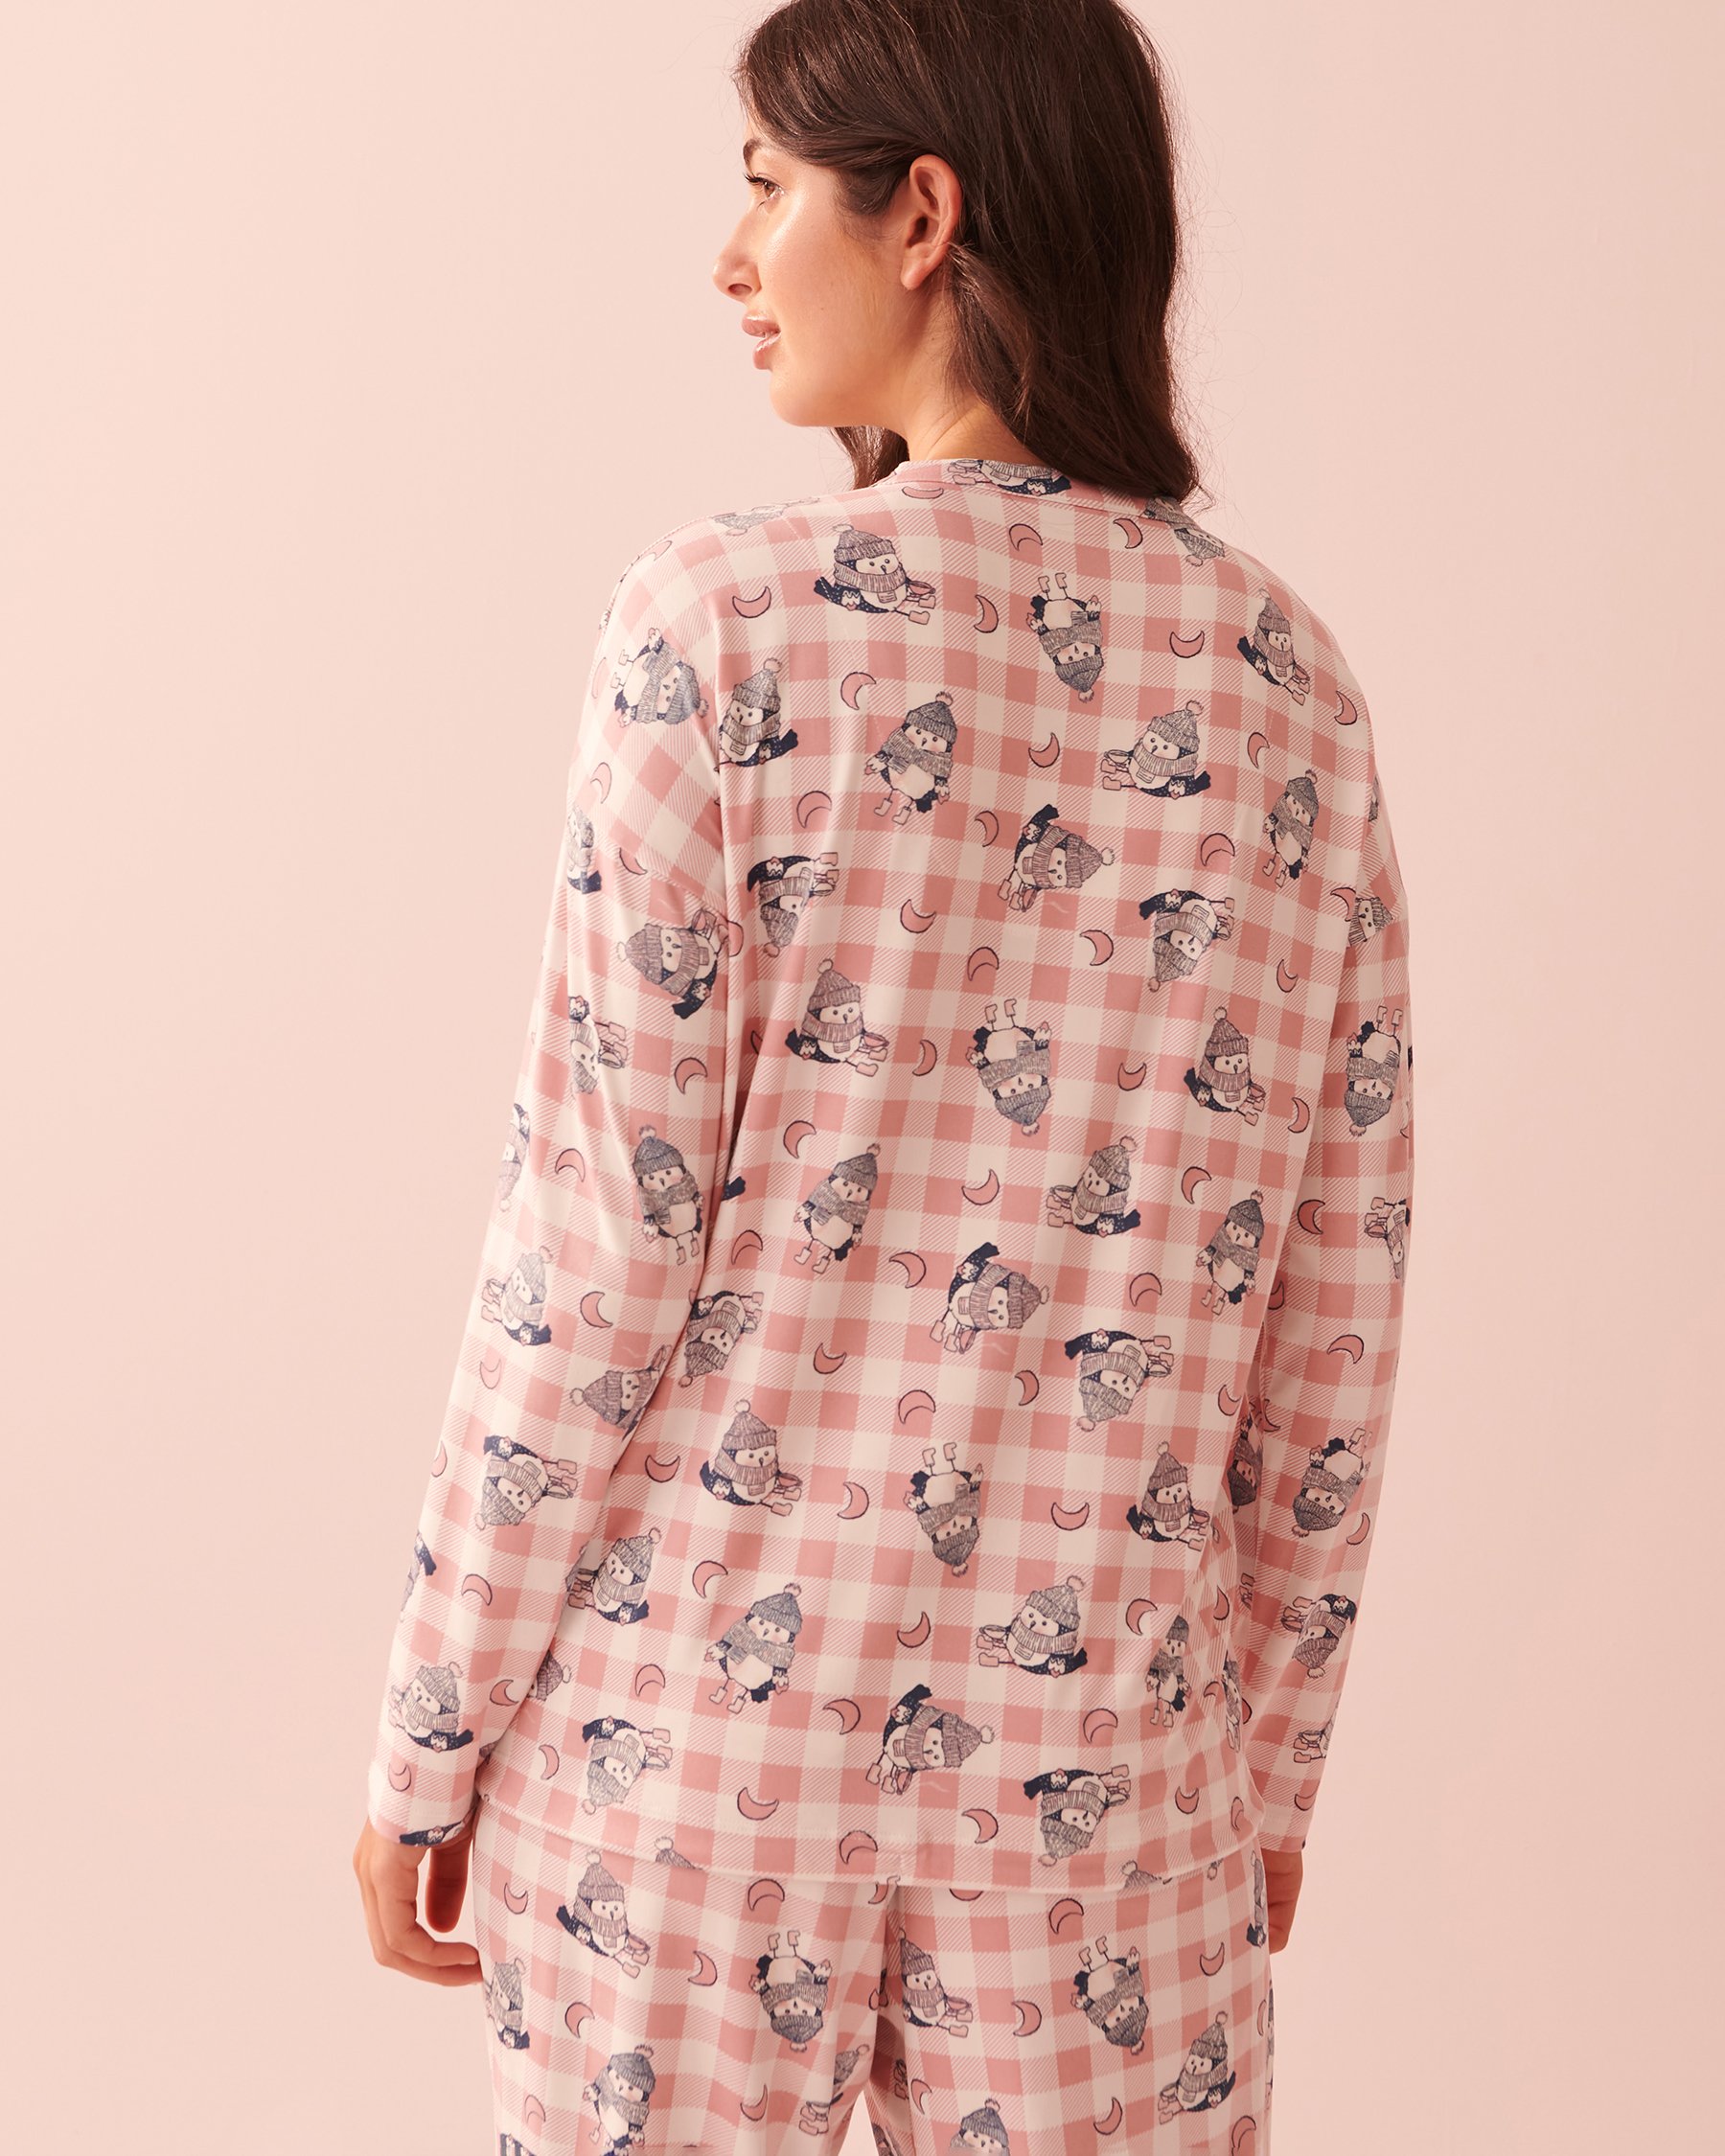 Sale: Deals on women's pajamas